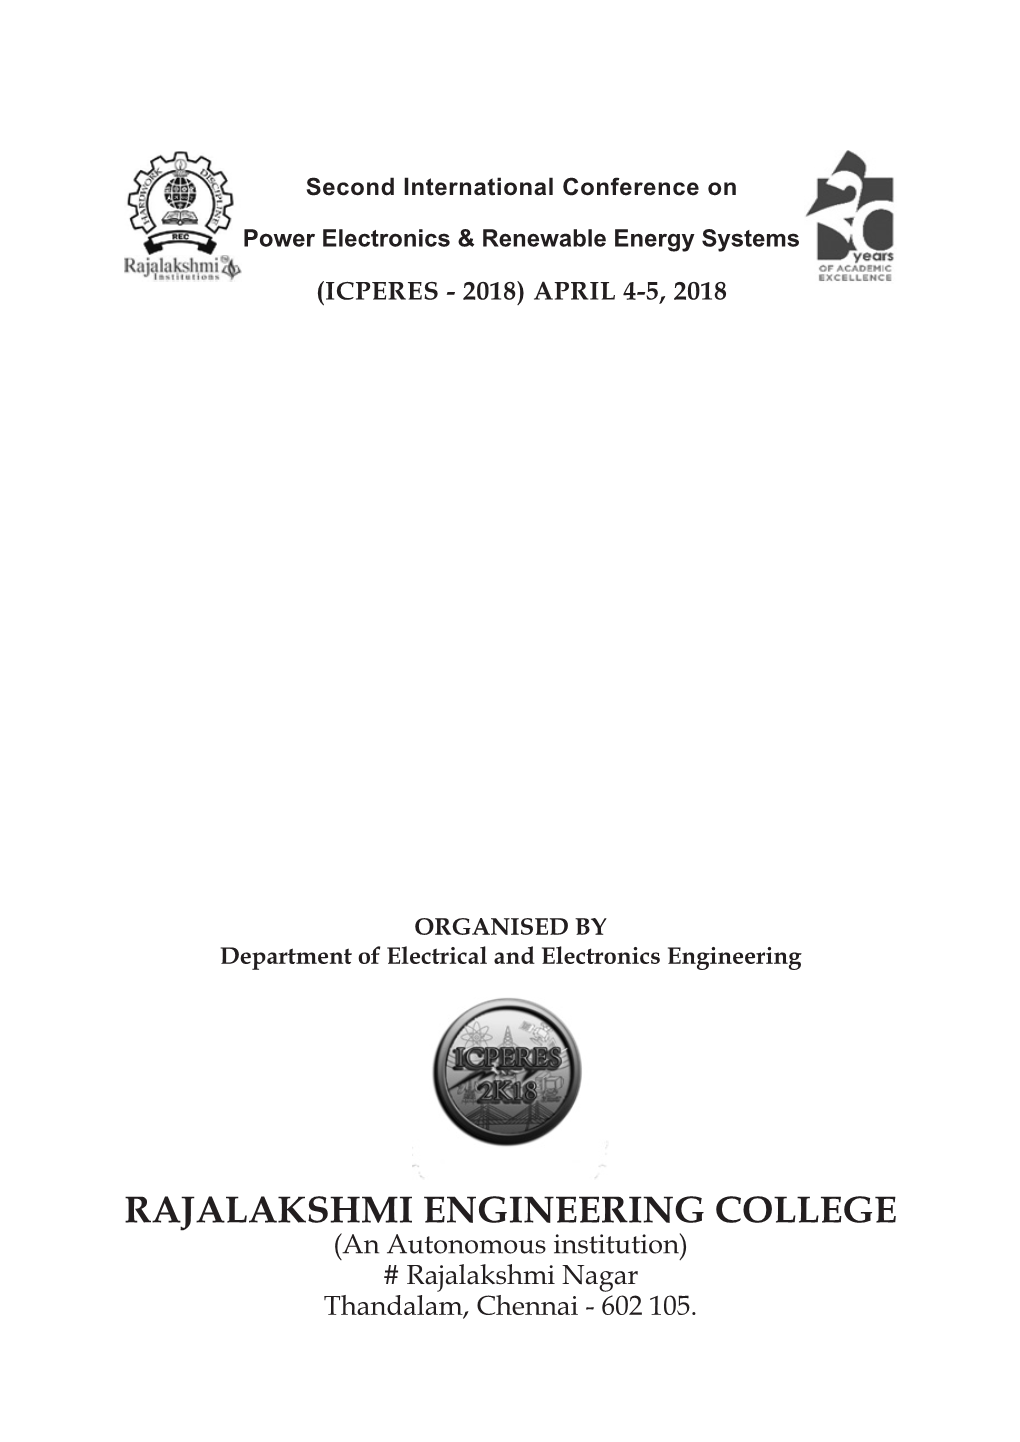 RAJALAKSHMI ENGINEERING COLLEGE (An Autonomous Institution) # Rajalakshmi Nagar Thandalam, Chennai - 602 105